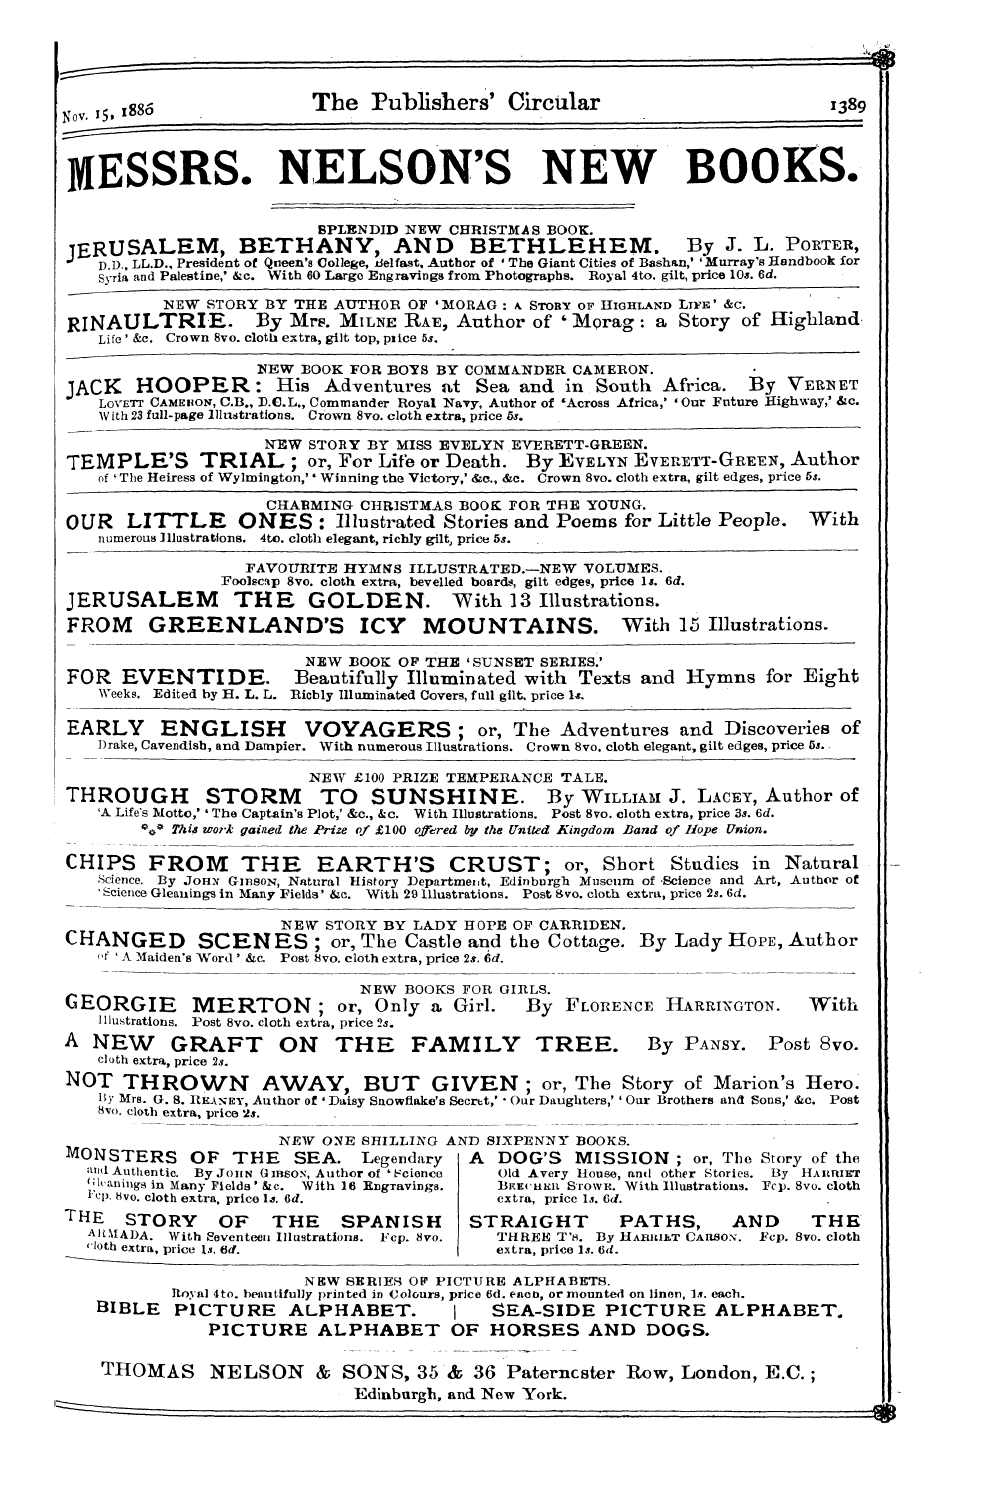 Publishers’ Circular (1880-1890): jS F Y, 1st edition: 31